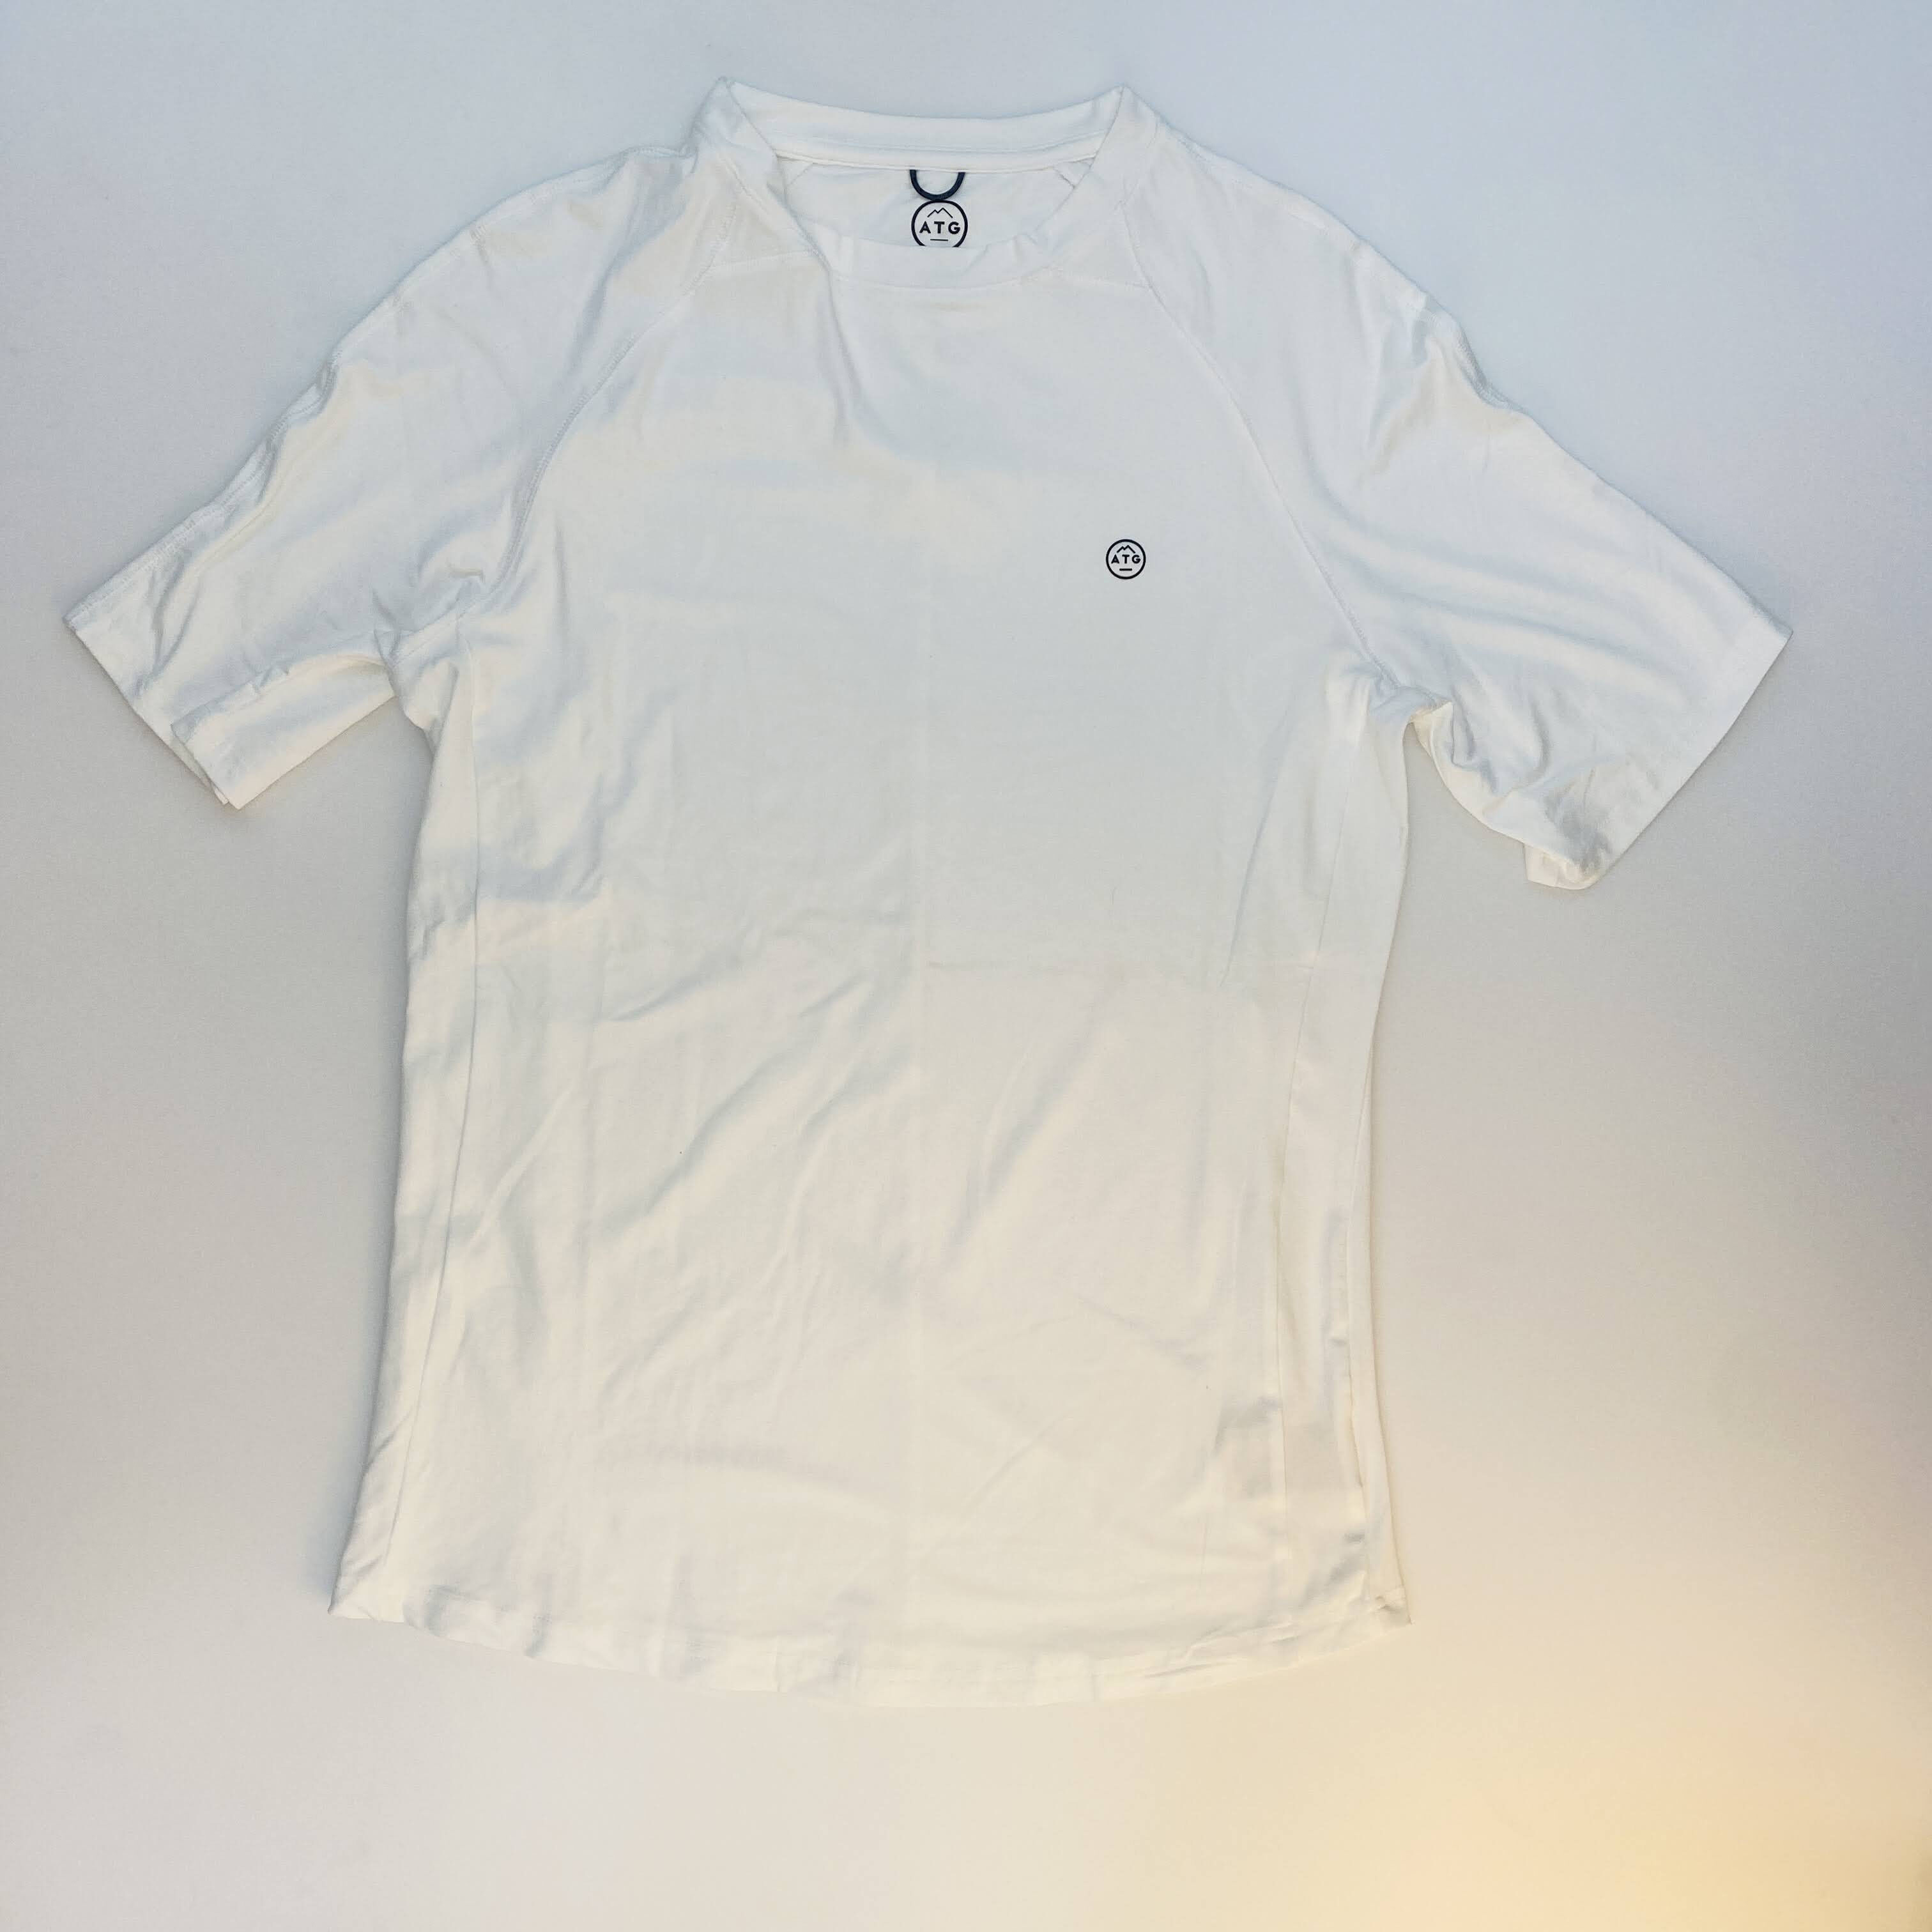 Wrangler Ss Performance T Shirt - Seconde main T-shirt homme - Blanc - M | Hardloop